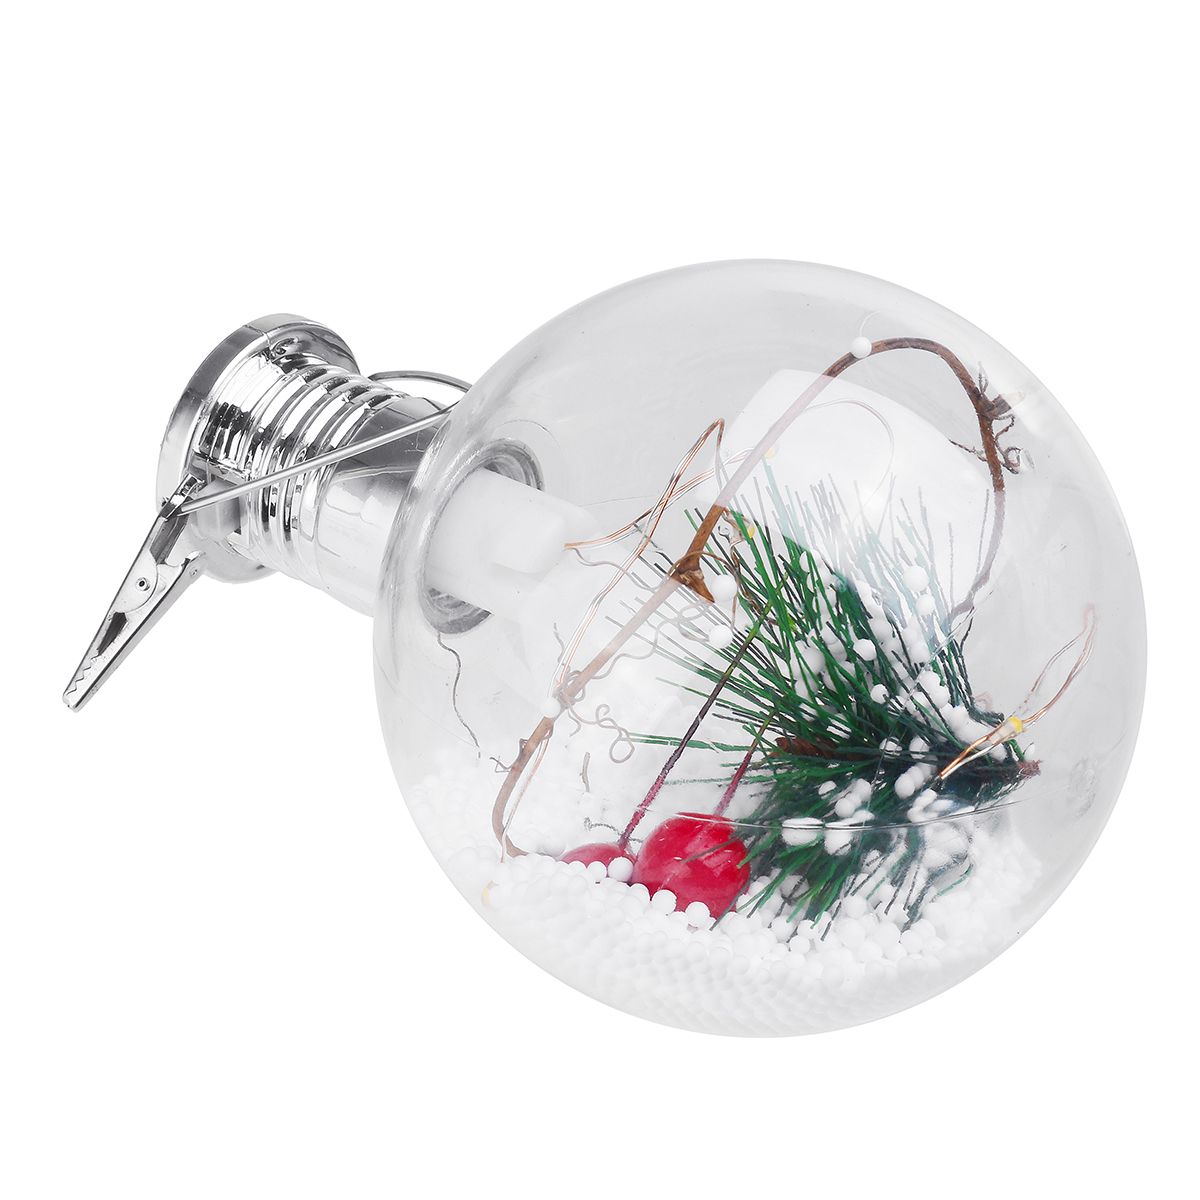 Outdoor-LED-Solar-Light-Bulb-Ball-Fairy-Lamp-for-Christmas-Tree-Wedding-Party-Home-Decor-1499914